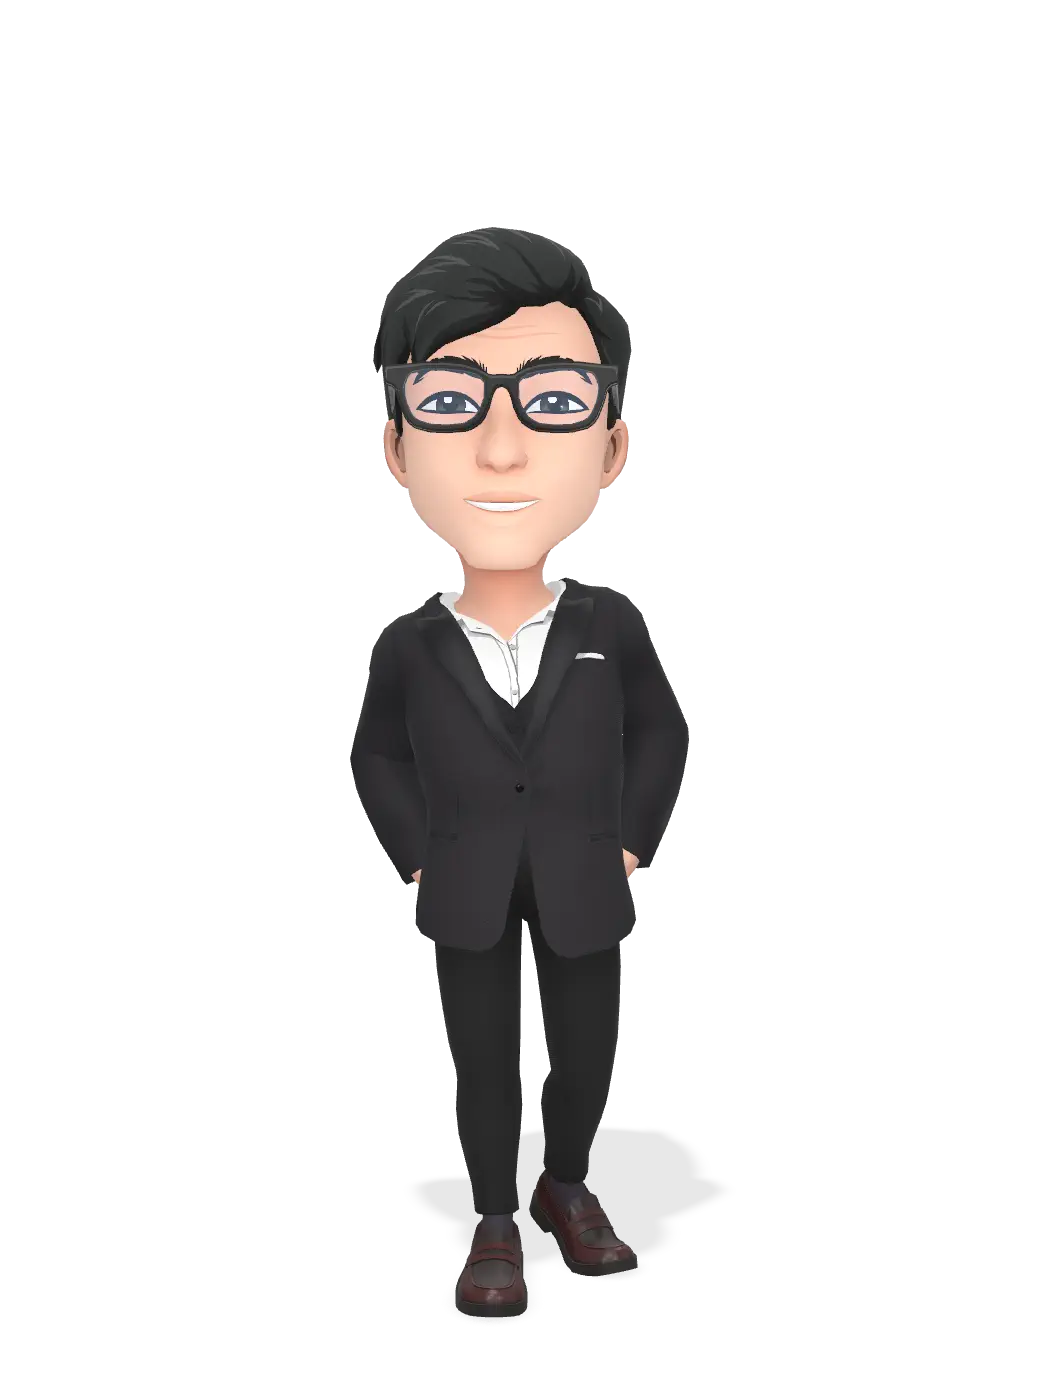 3D Bitmoji for abderrahimayoub avatar